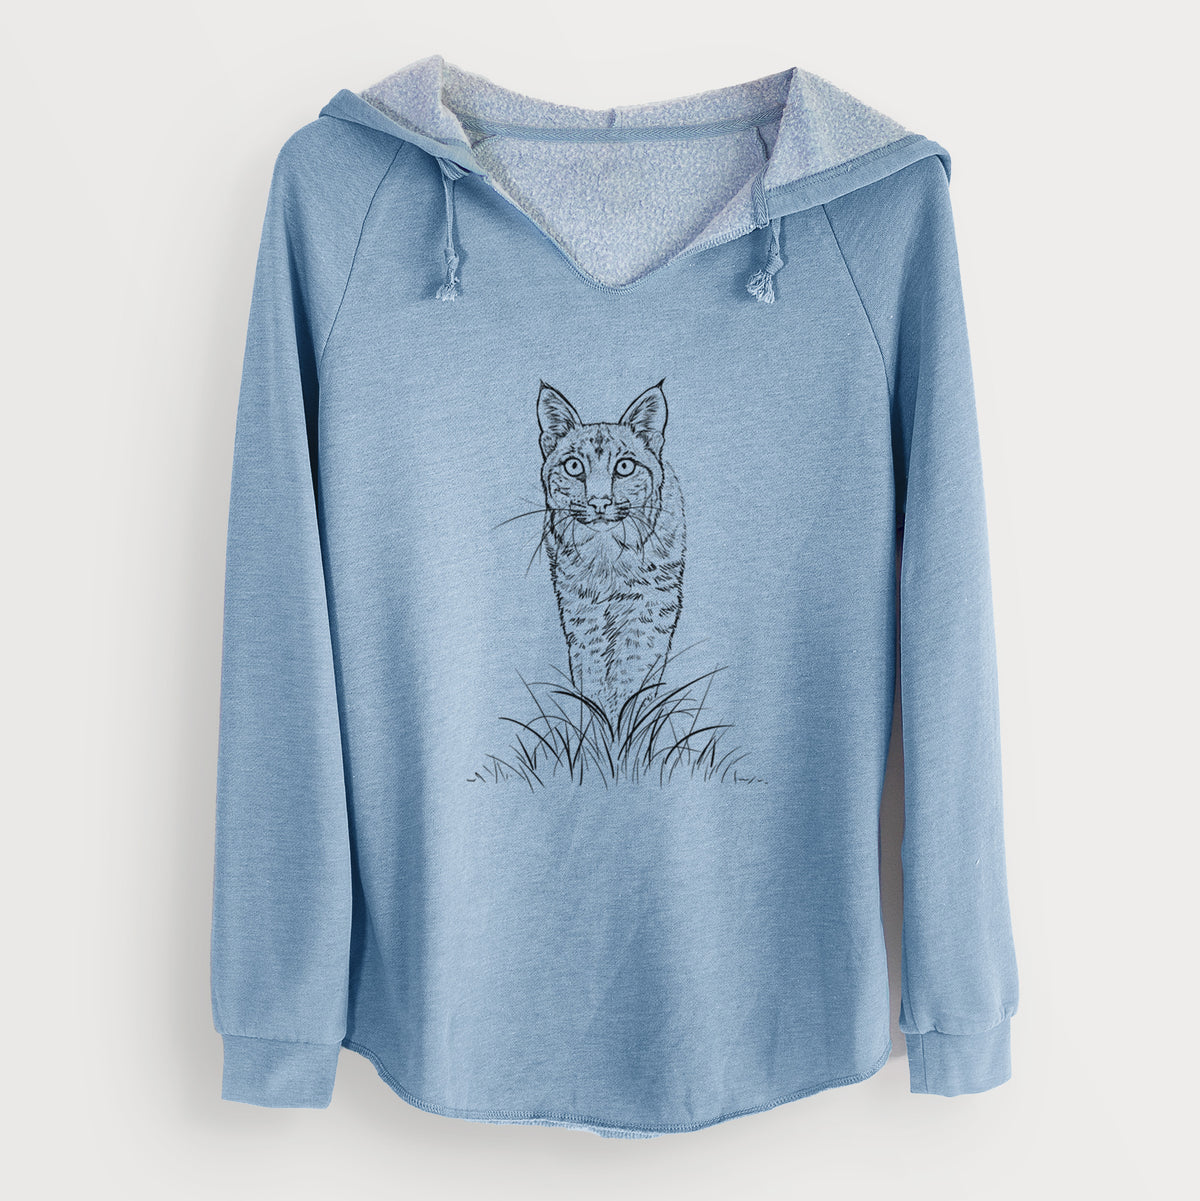 Bobcat - Lynx rufus - Cali Wave Hooded Sweatshirt